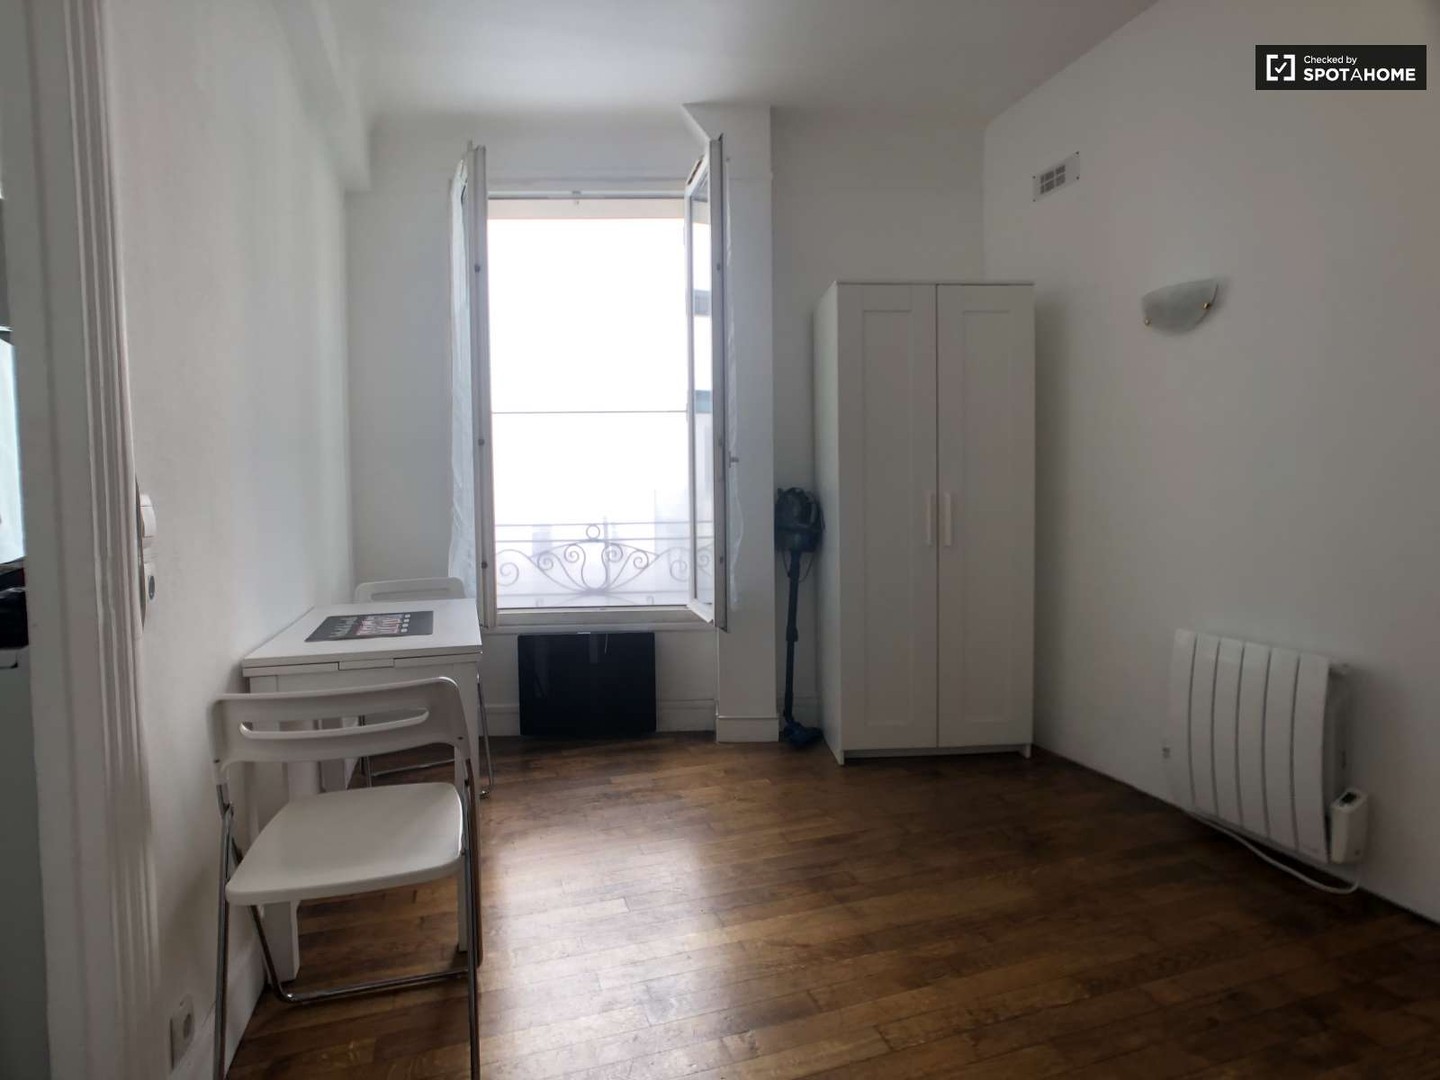 Very bright studio for rent in Boulogne-billancourt